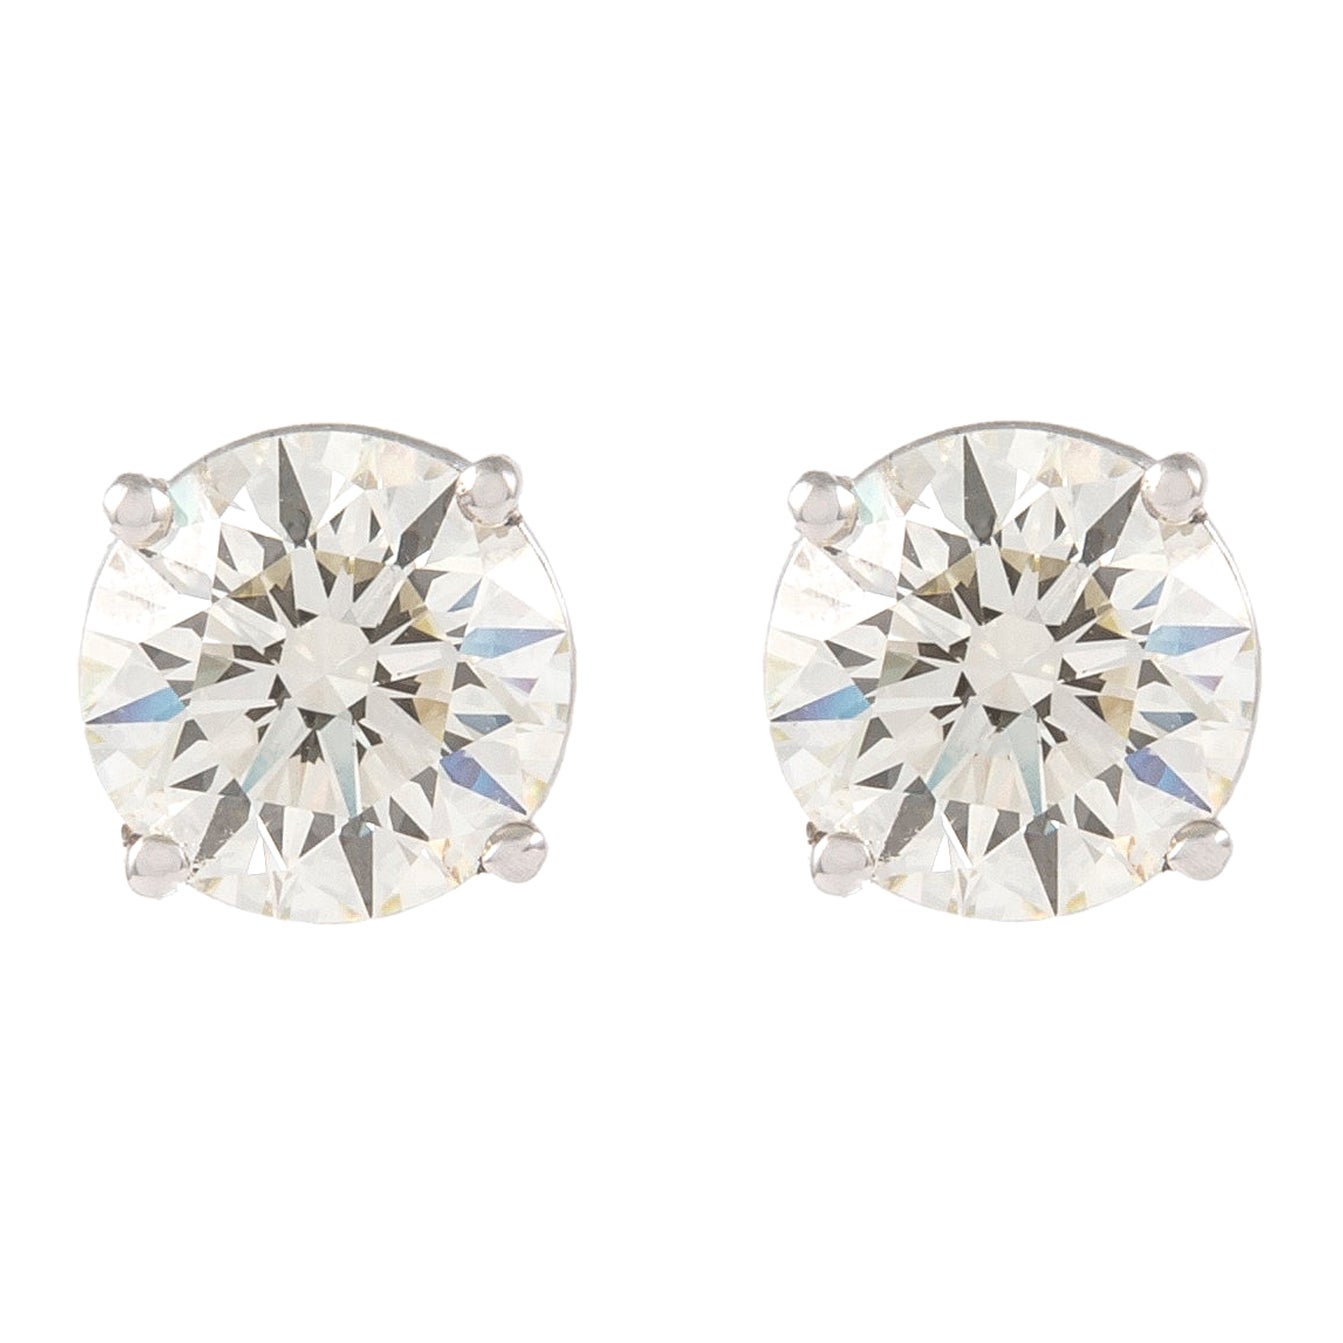 Alexander EGL Certified 2.54 Carat Diamond Stud Earrings 18k White Gold